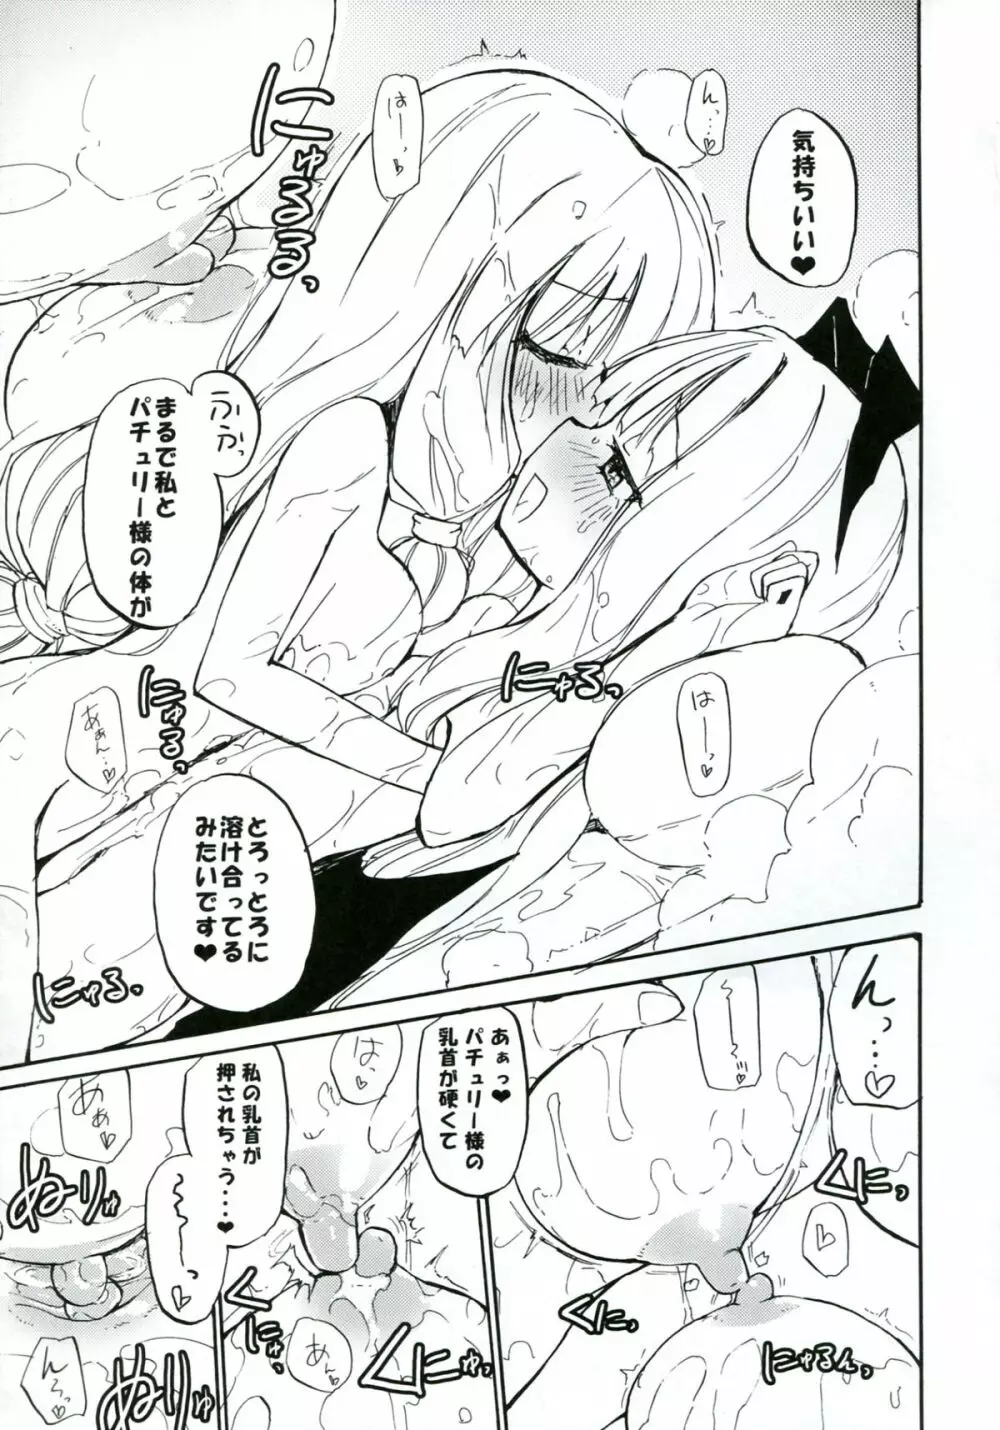 Homuraya Milk ★ Collection 2 - page63